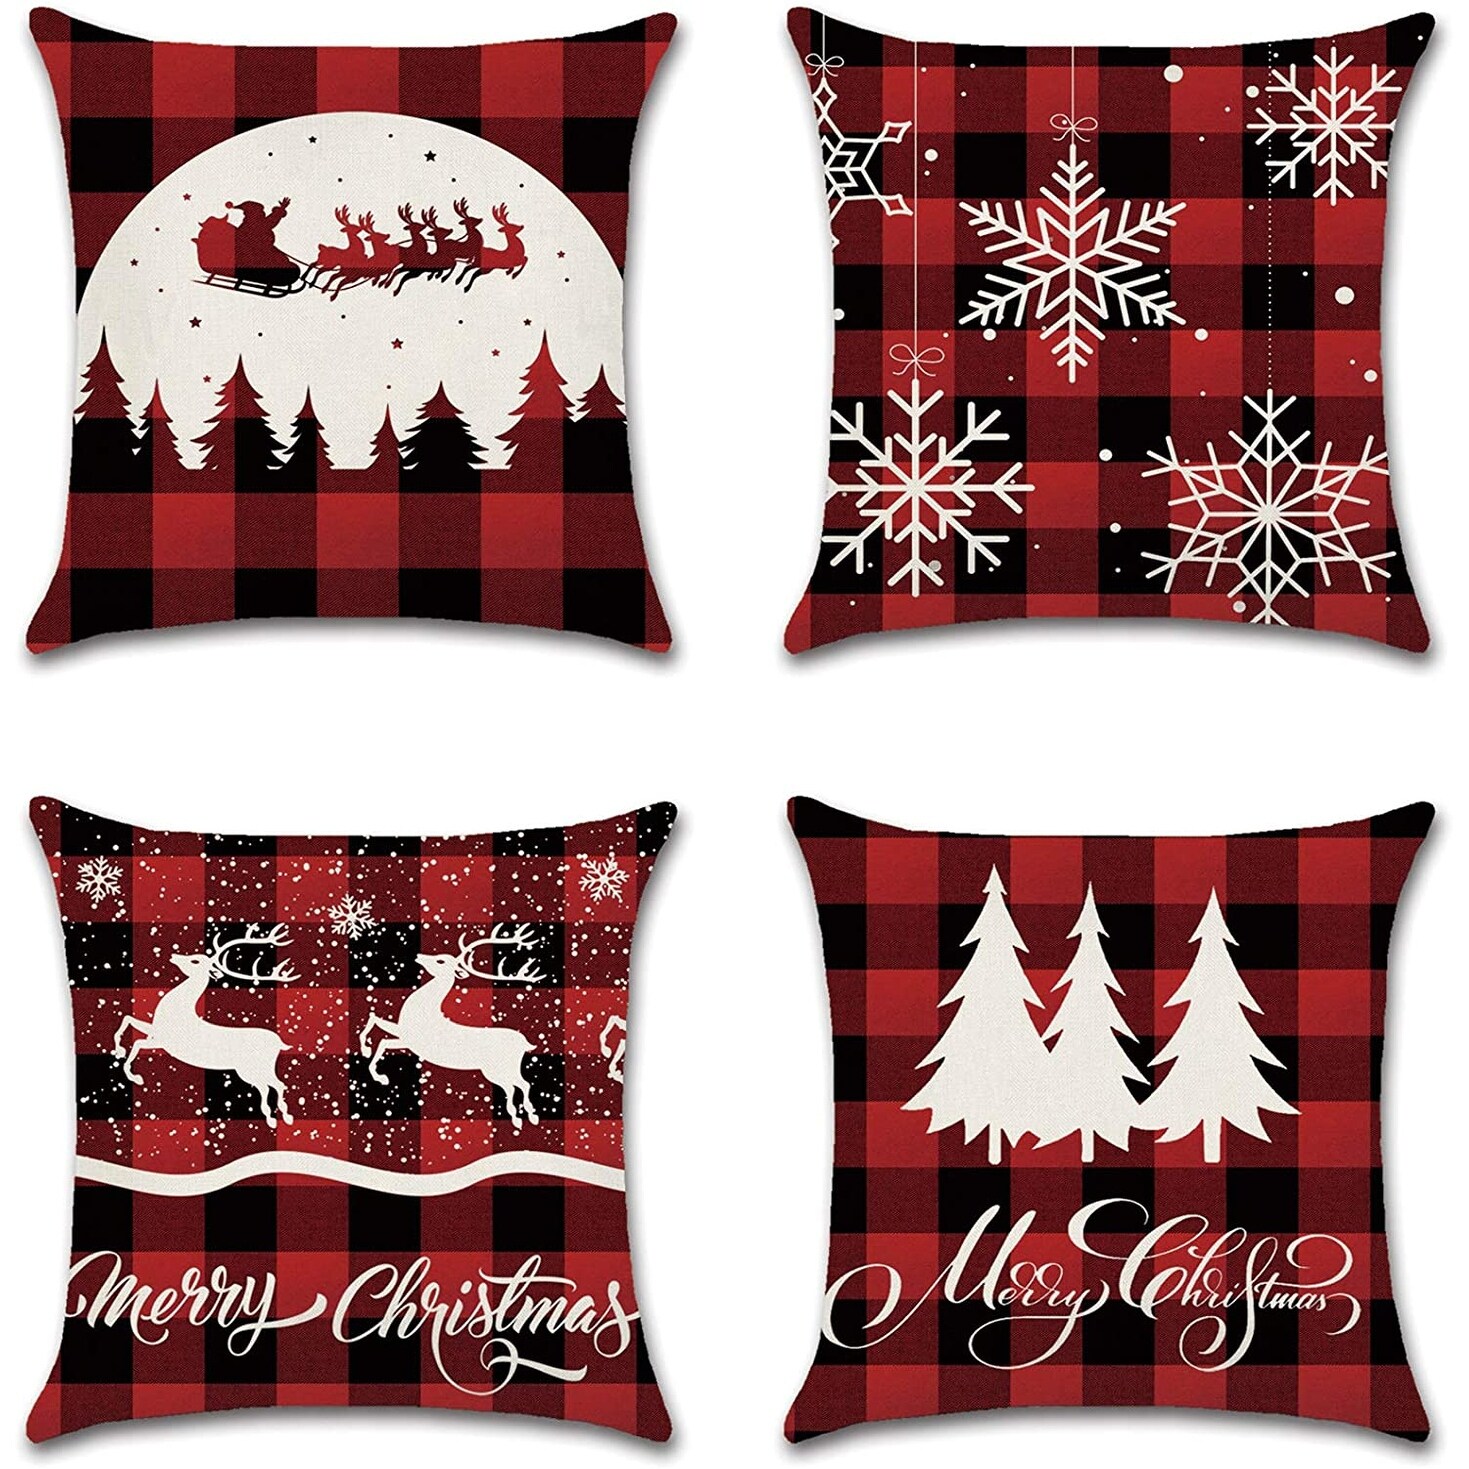 https://ak1.ostkcdn.com/images/products/is/images/direct/f8dda28d7518920d0faae9696951e488bdd14b02/4-Pcs-18x18%2C-Buffalo-Plaid-Christmas-Decorations-Holiday-Decorative-Pillow-Covers.jpg